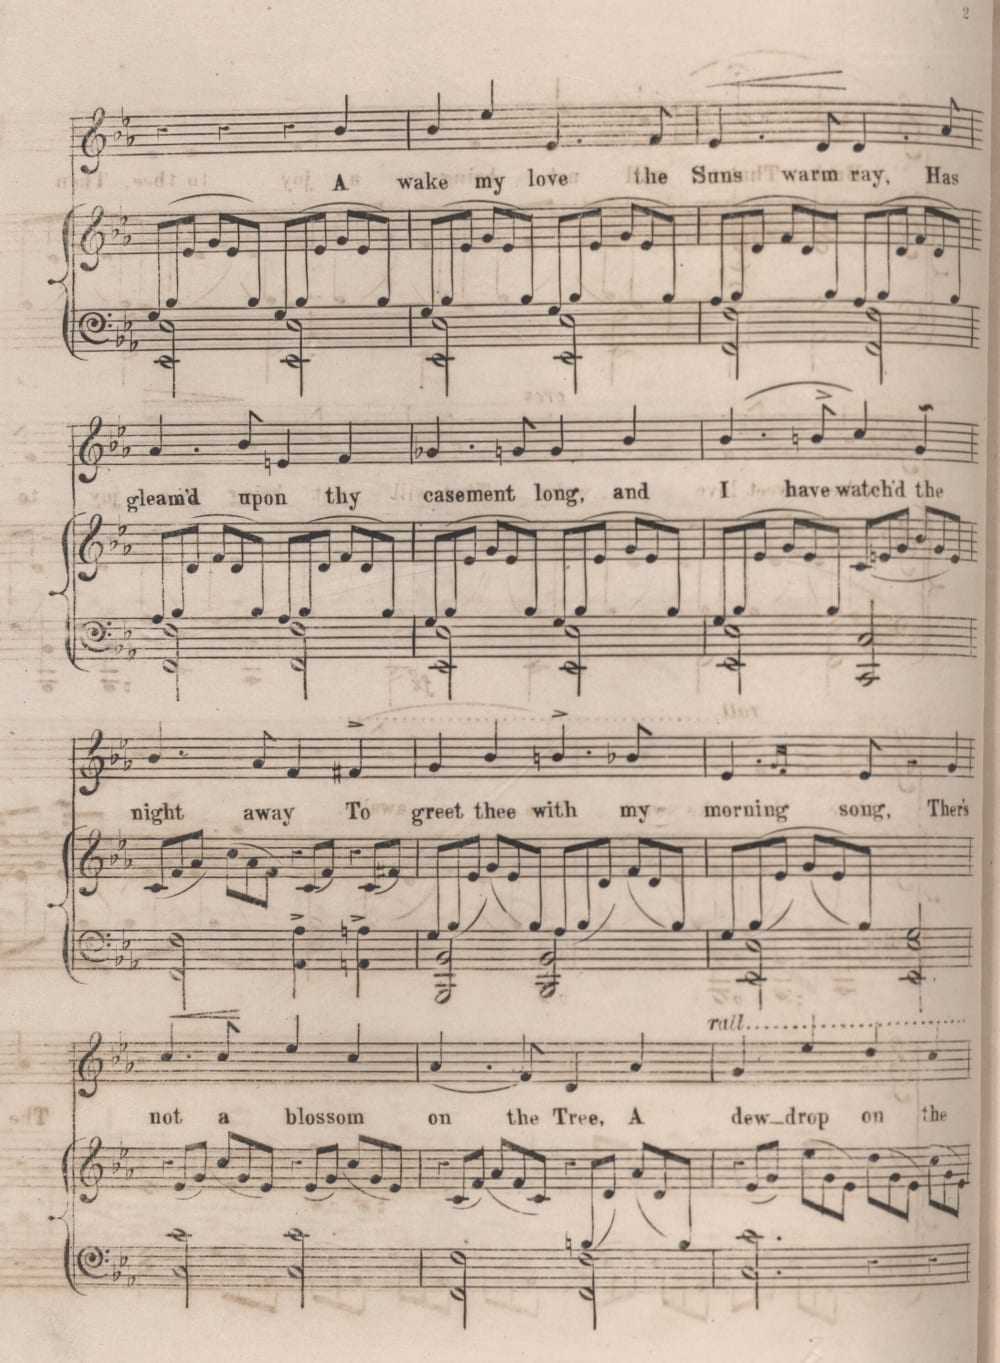 Awake, my love, serenade, by E. Spagnoletti junior (Sydney, 1855)